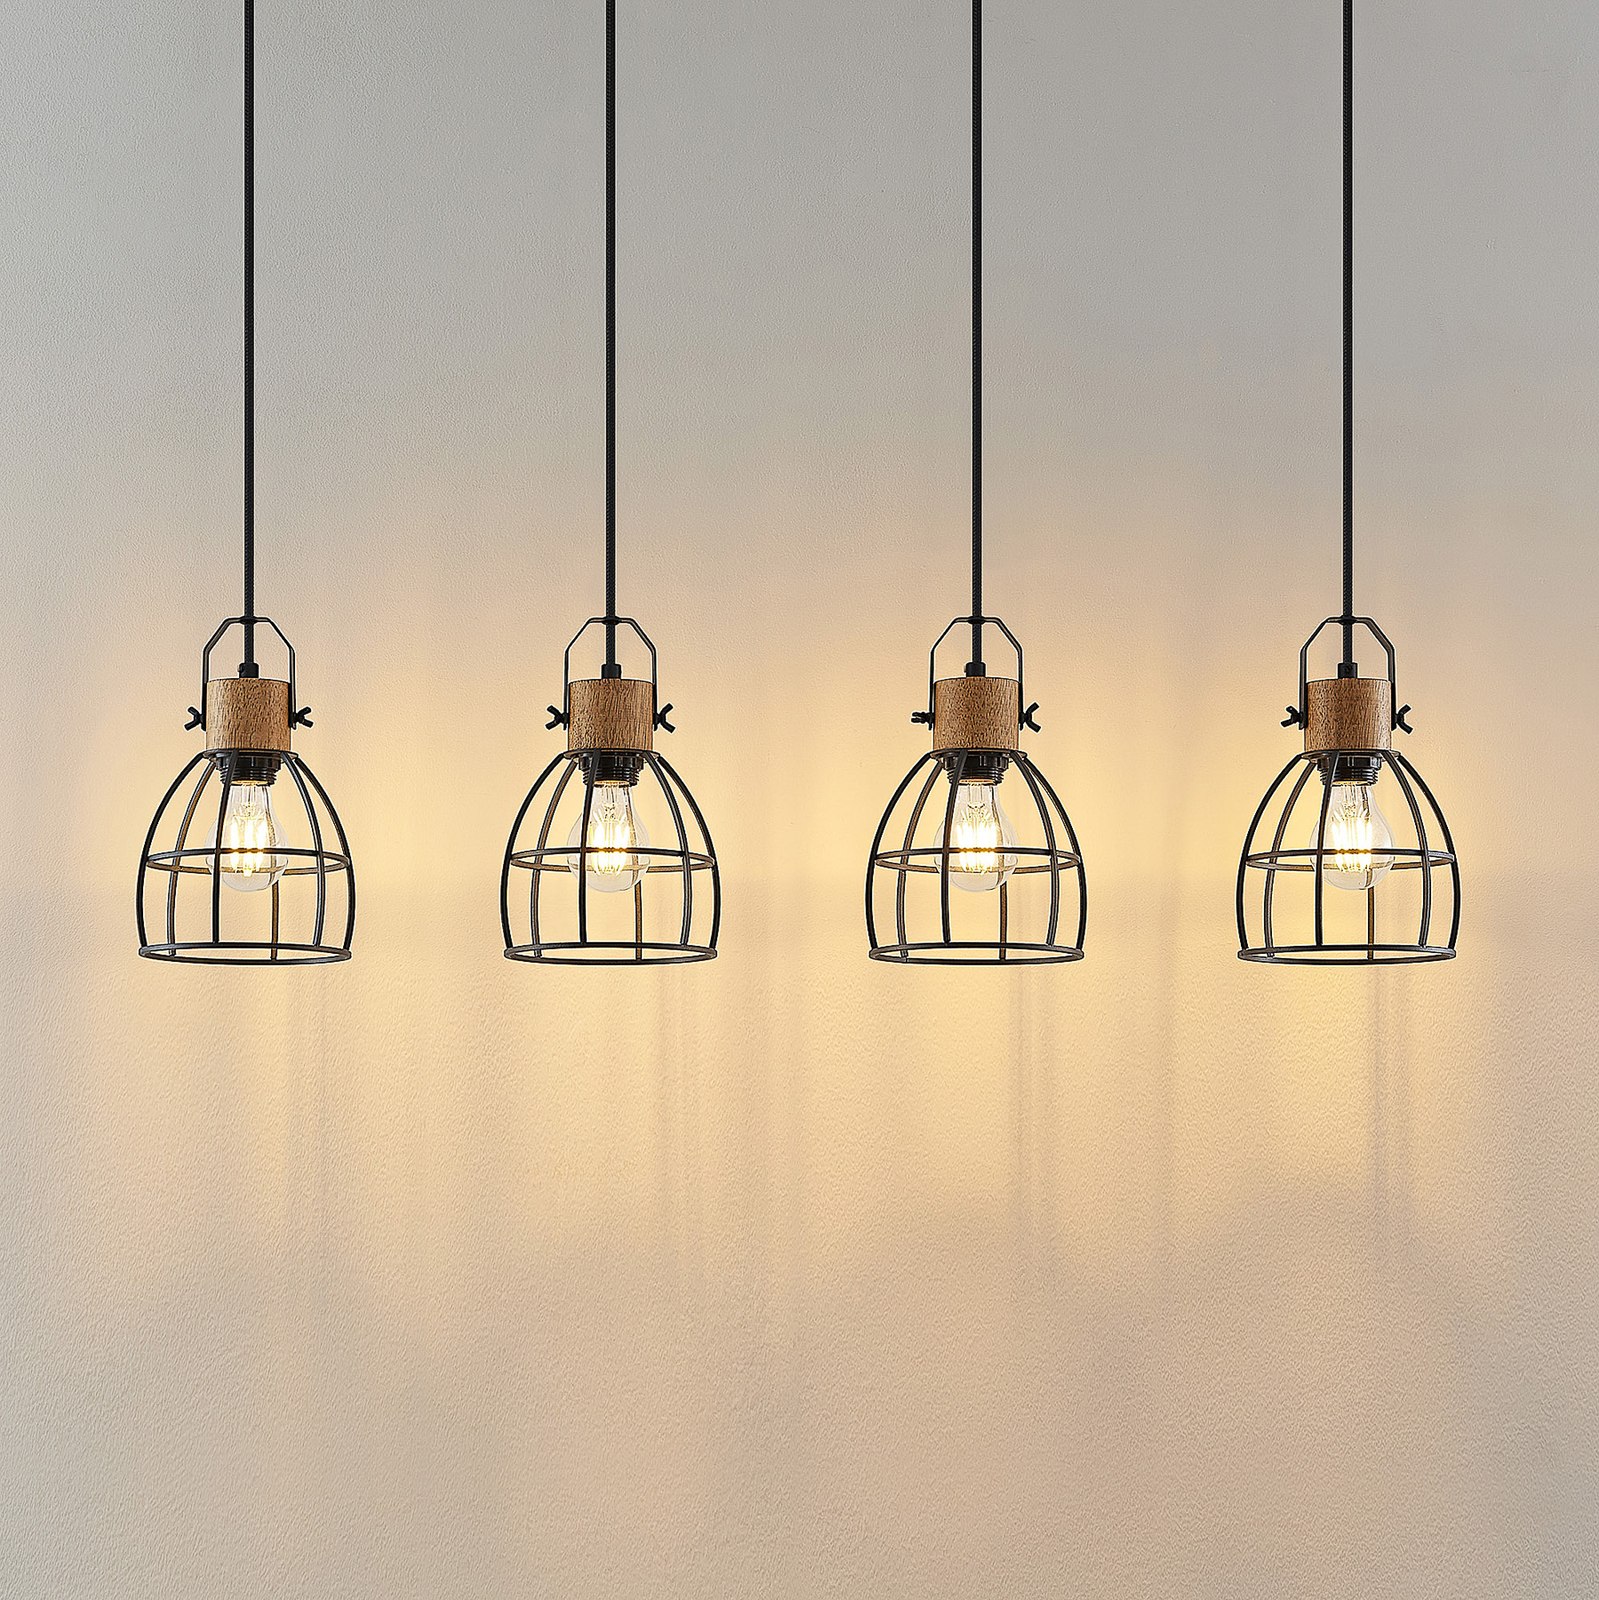 Lindby Flintos hanging light, 4-bulb, light wood